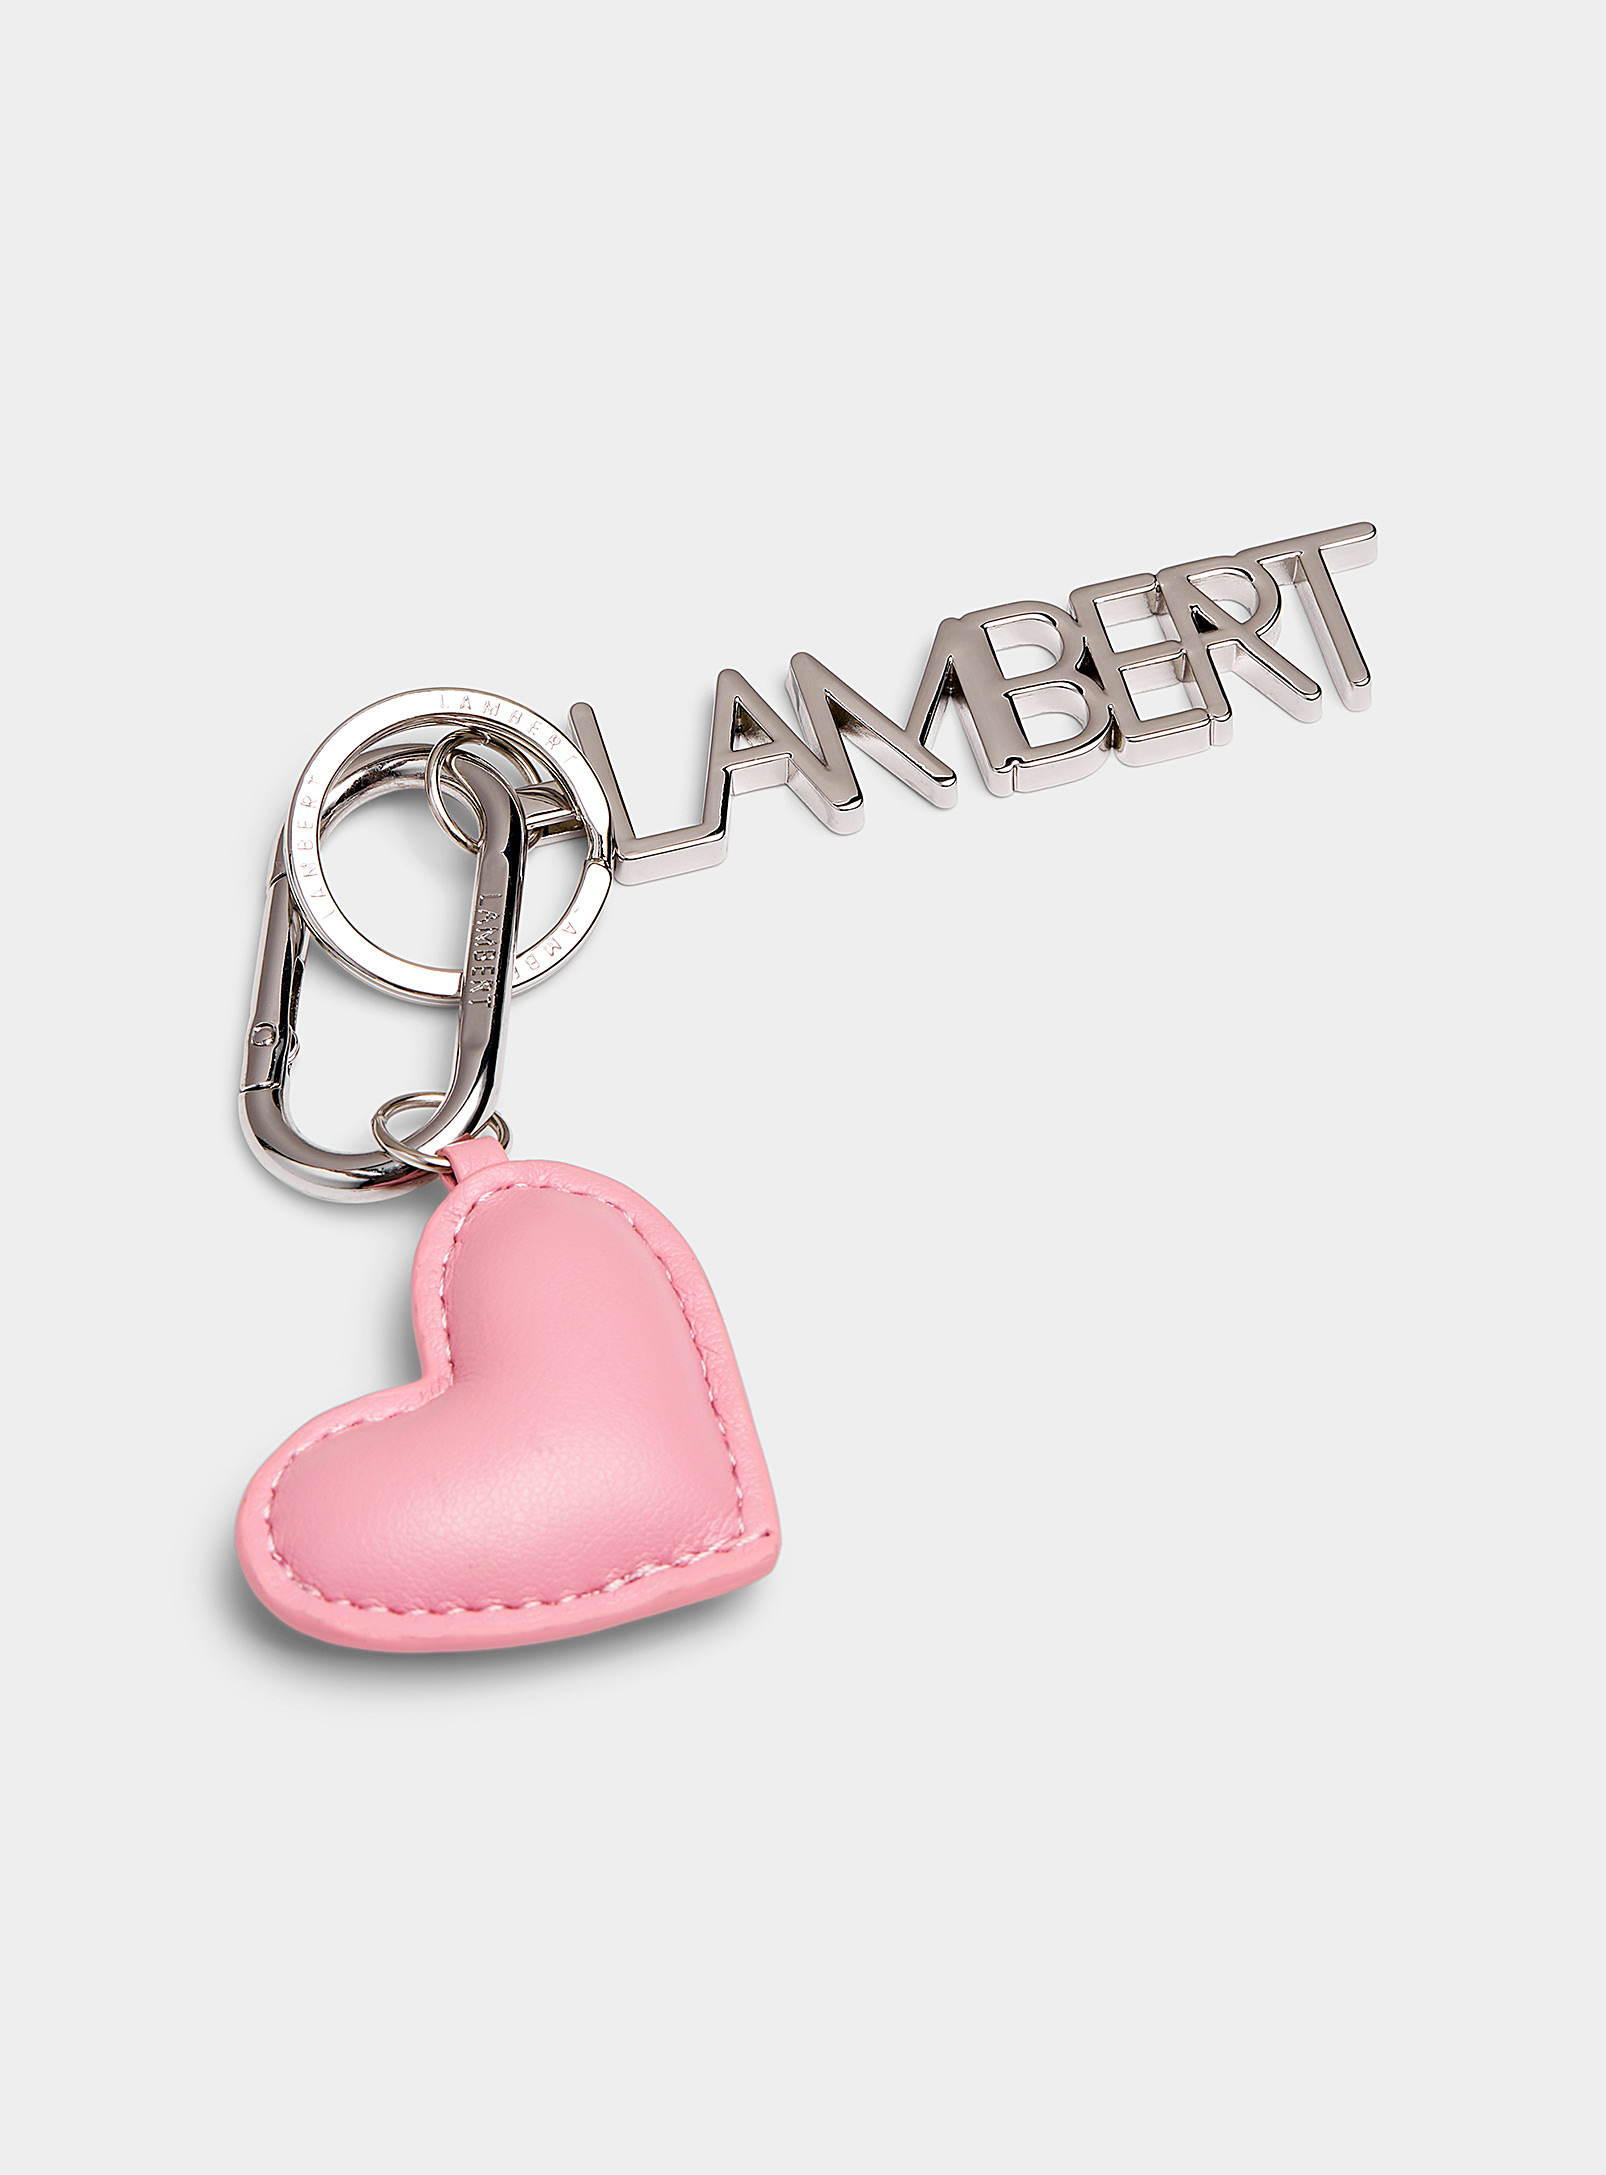 Lambert - Women's Adore heart and logo key ring